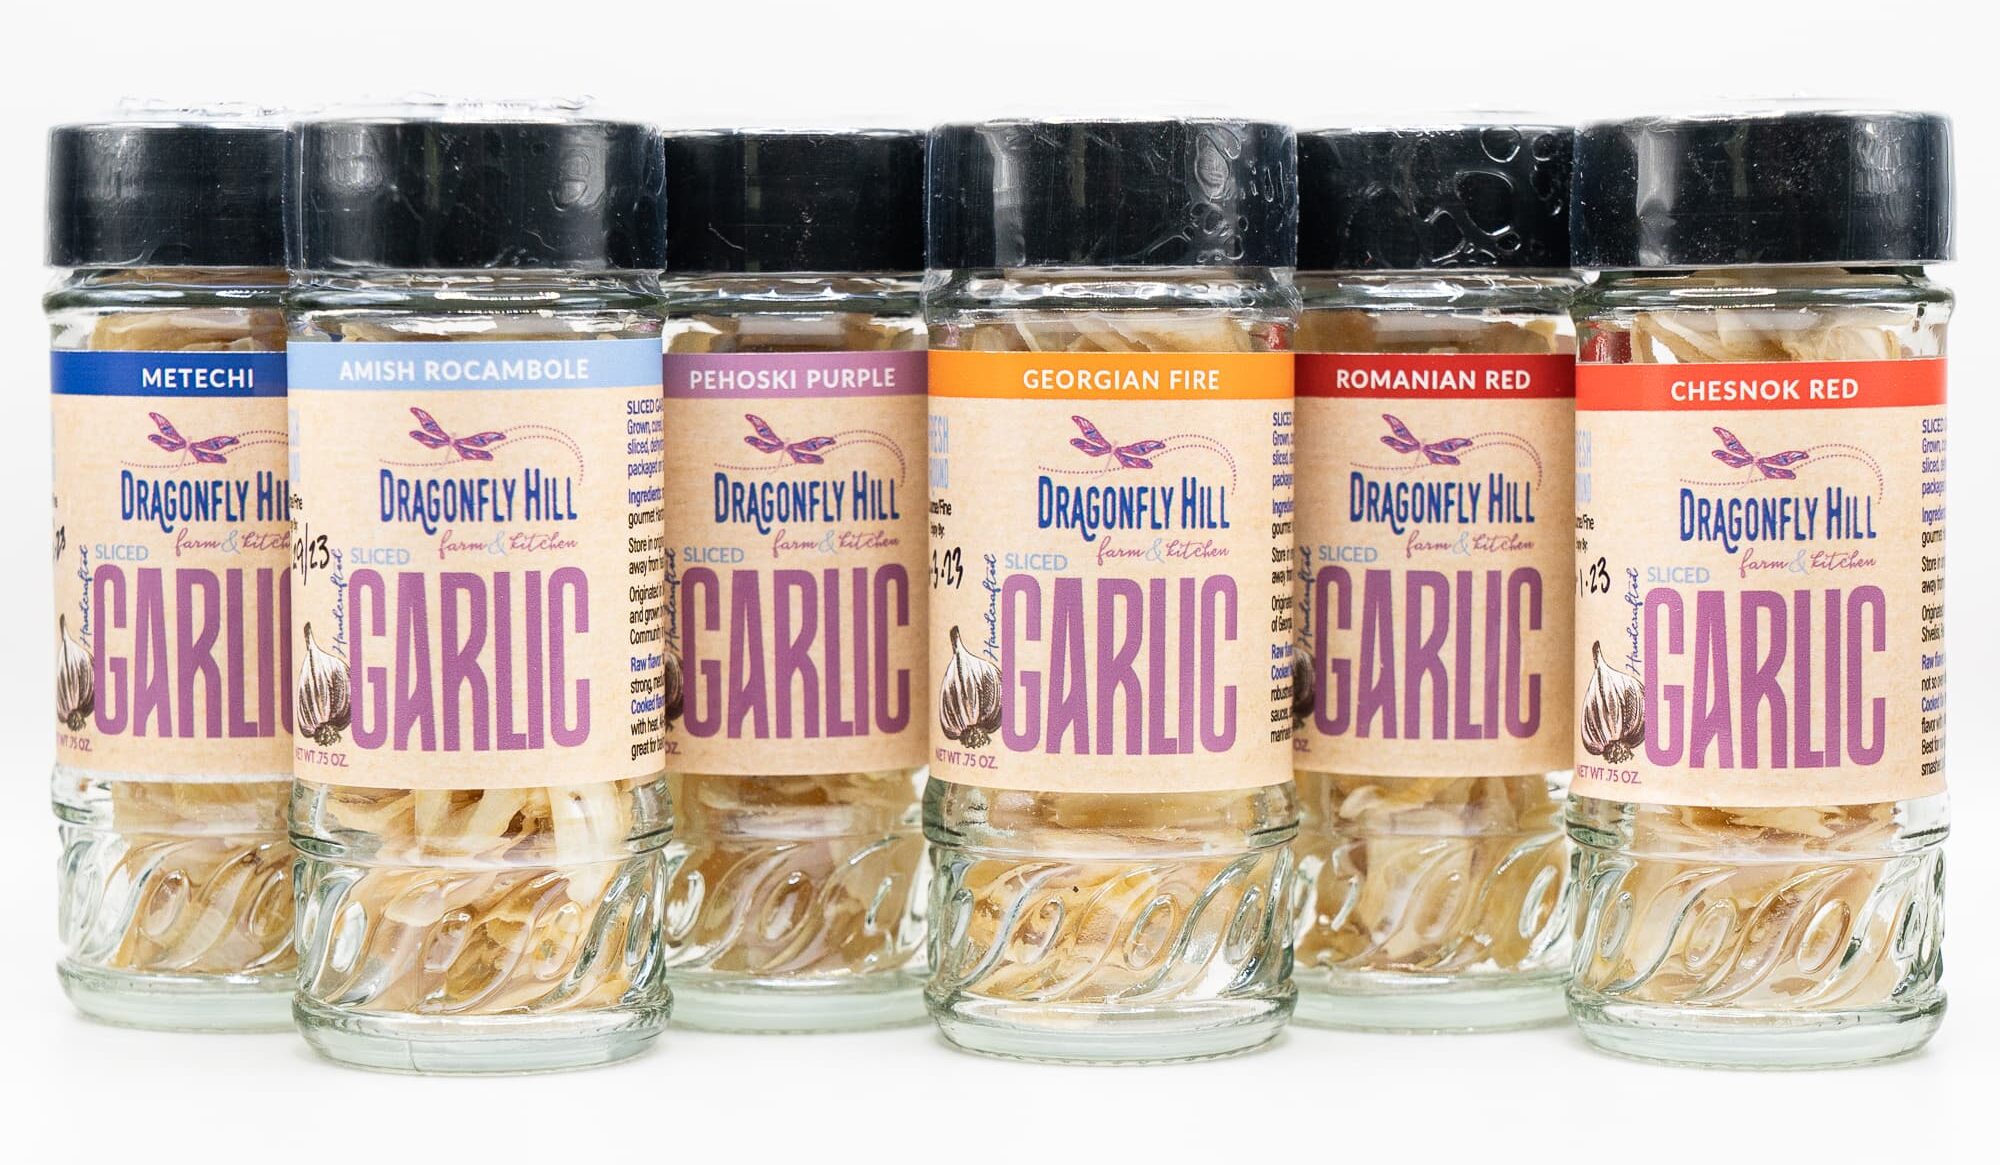 Taste Profit Marketing brand work for Dragonfly Hill Garlic